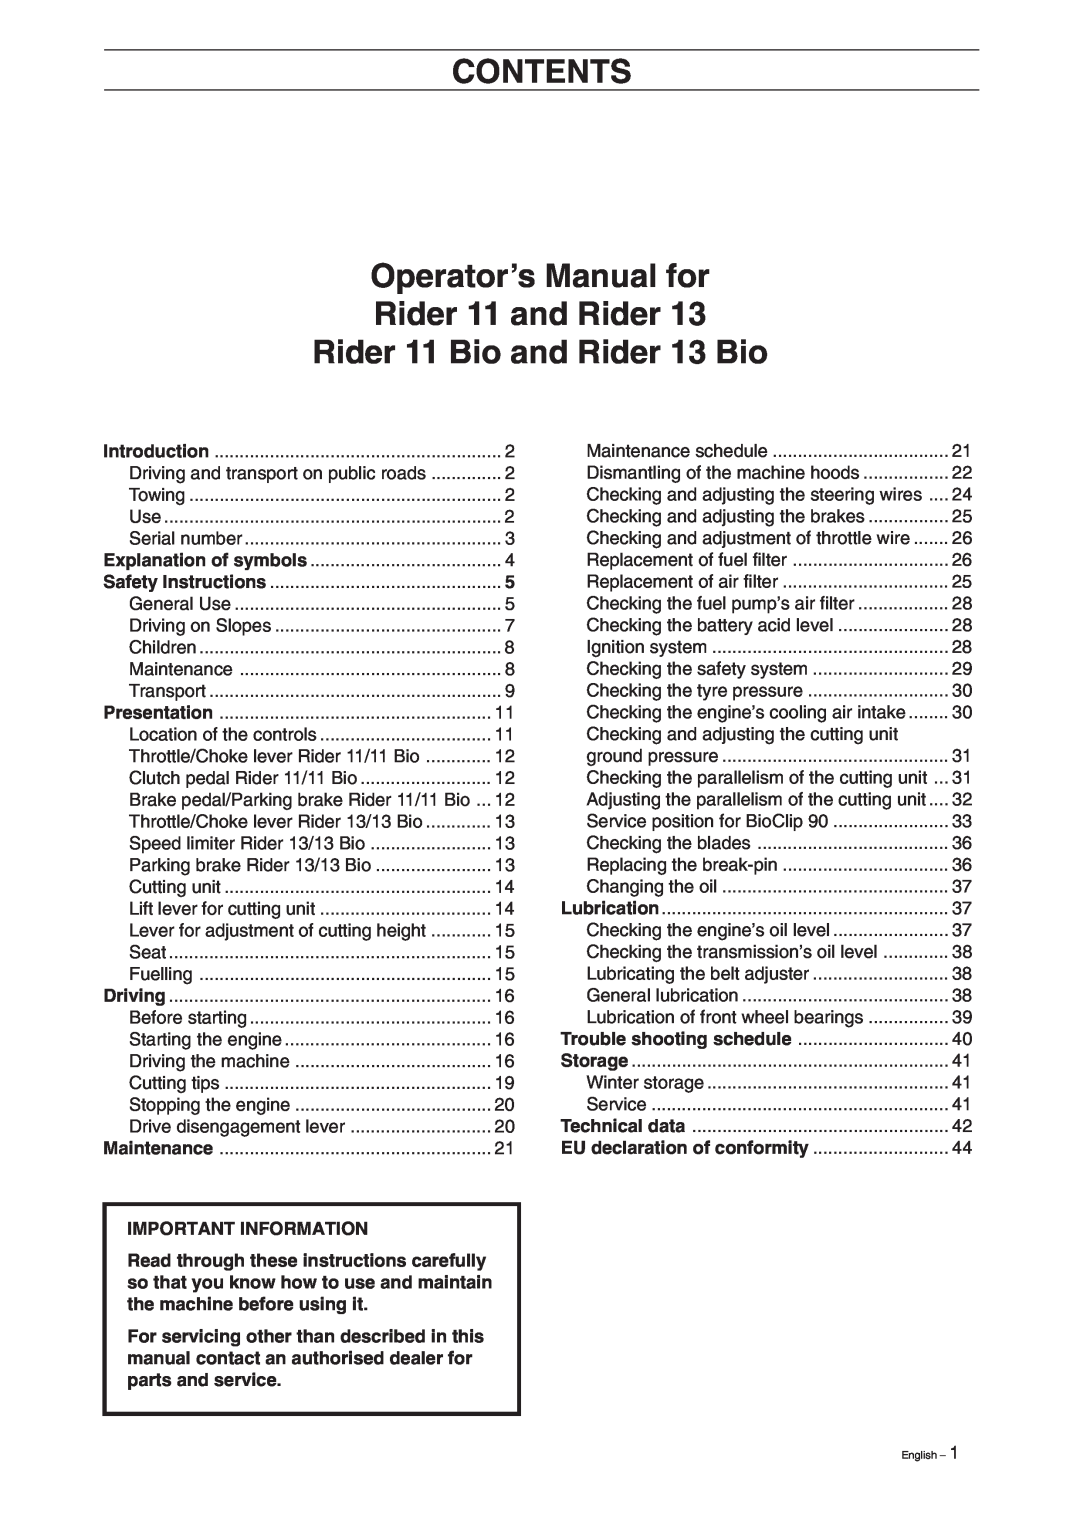 Husqvarna manual CONTENTS Operator’s Manual for Rider 11 and Rider, Rider 11 Bio and Rider 13 Bio, Important Information 